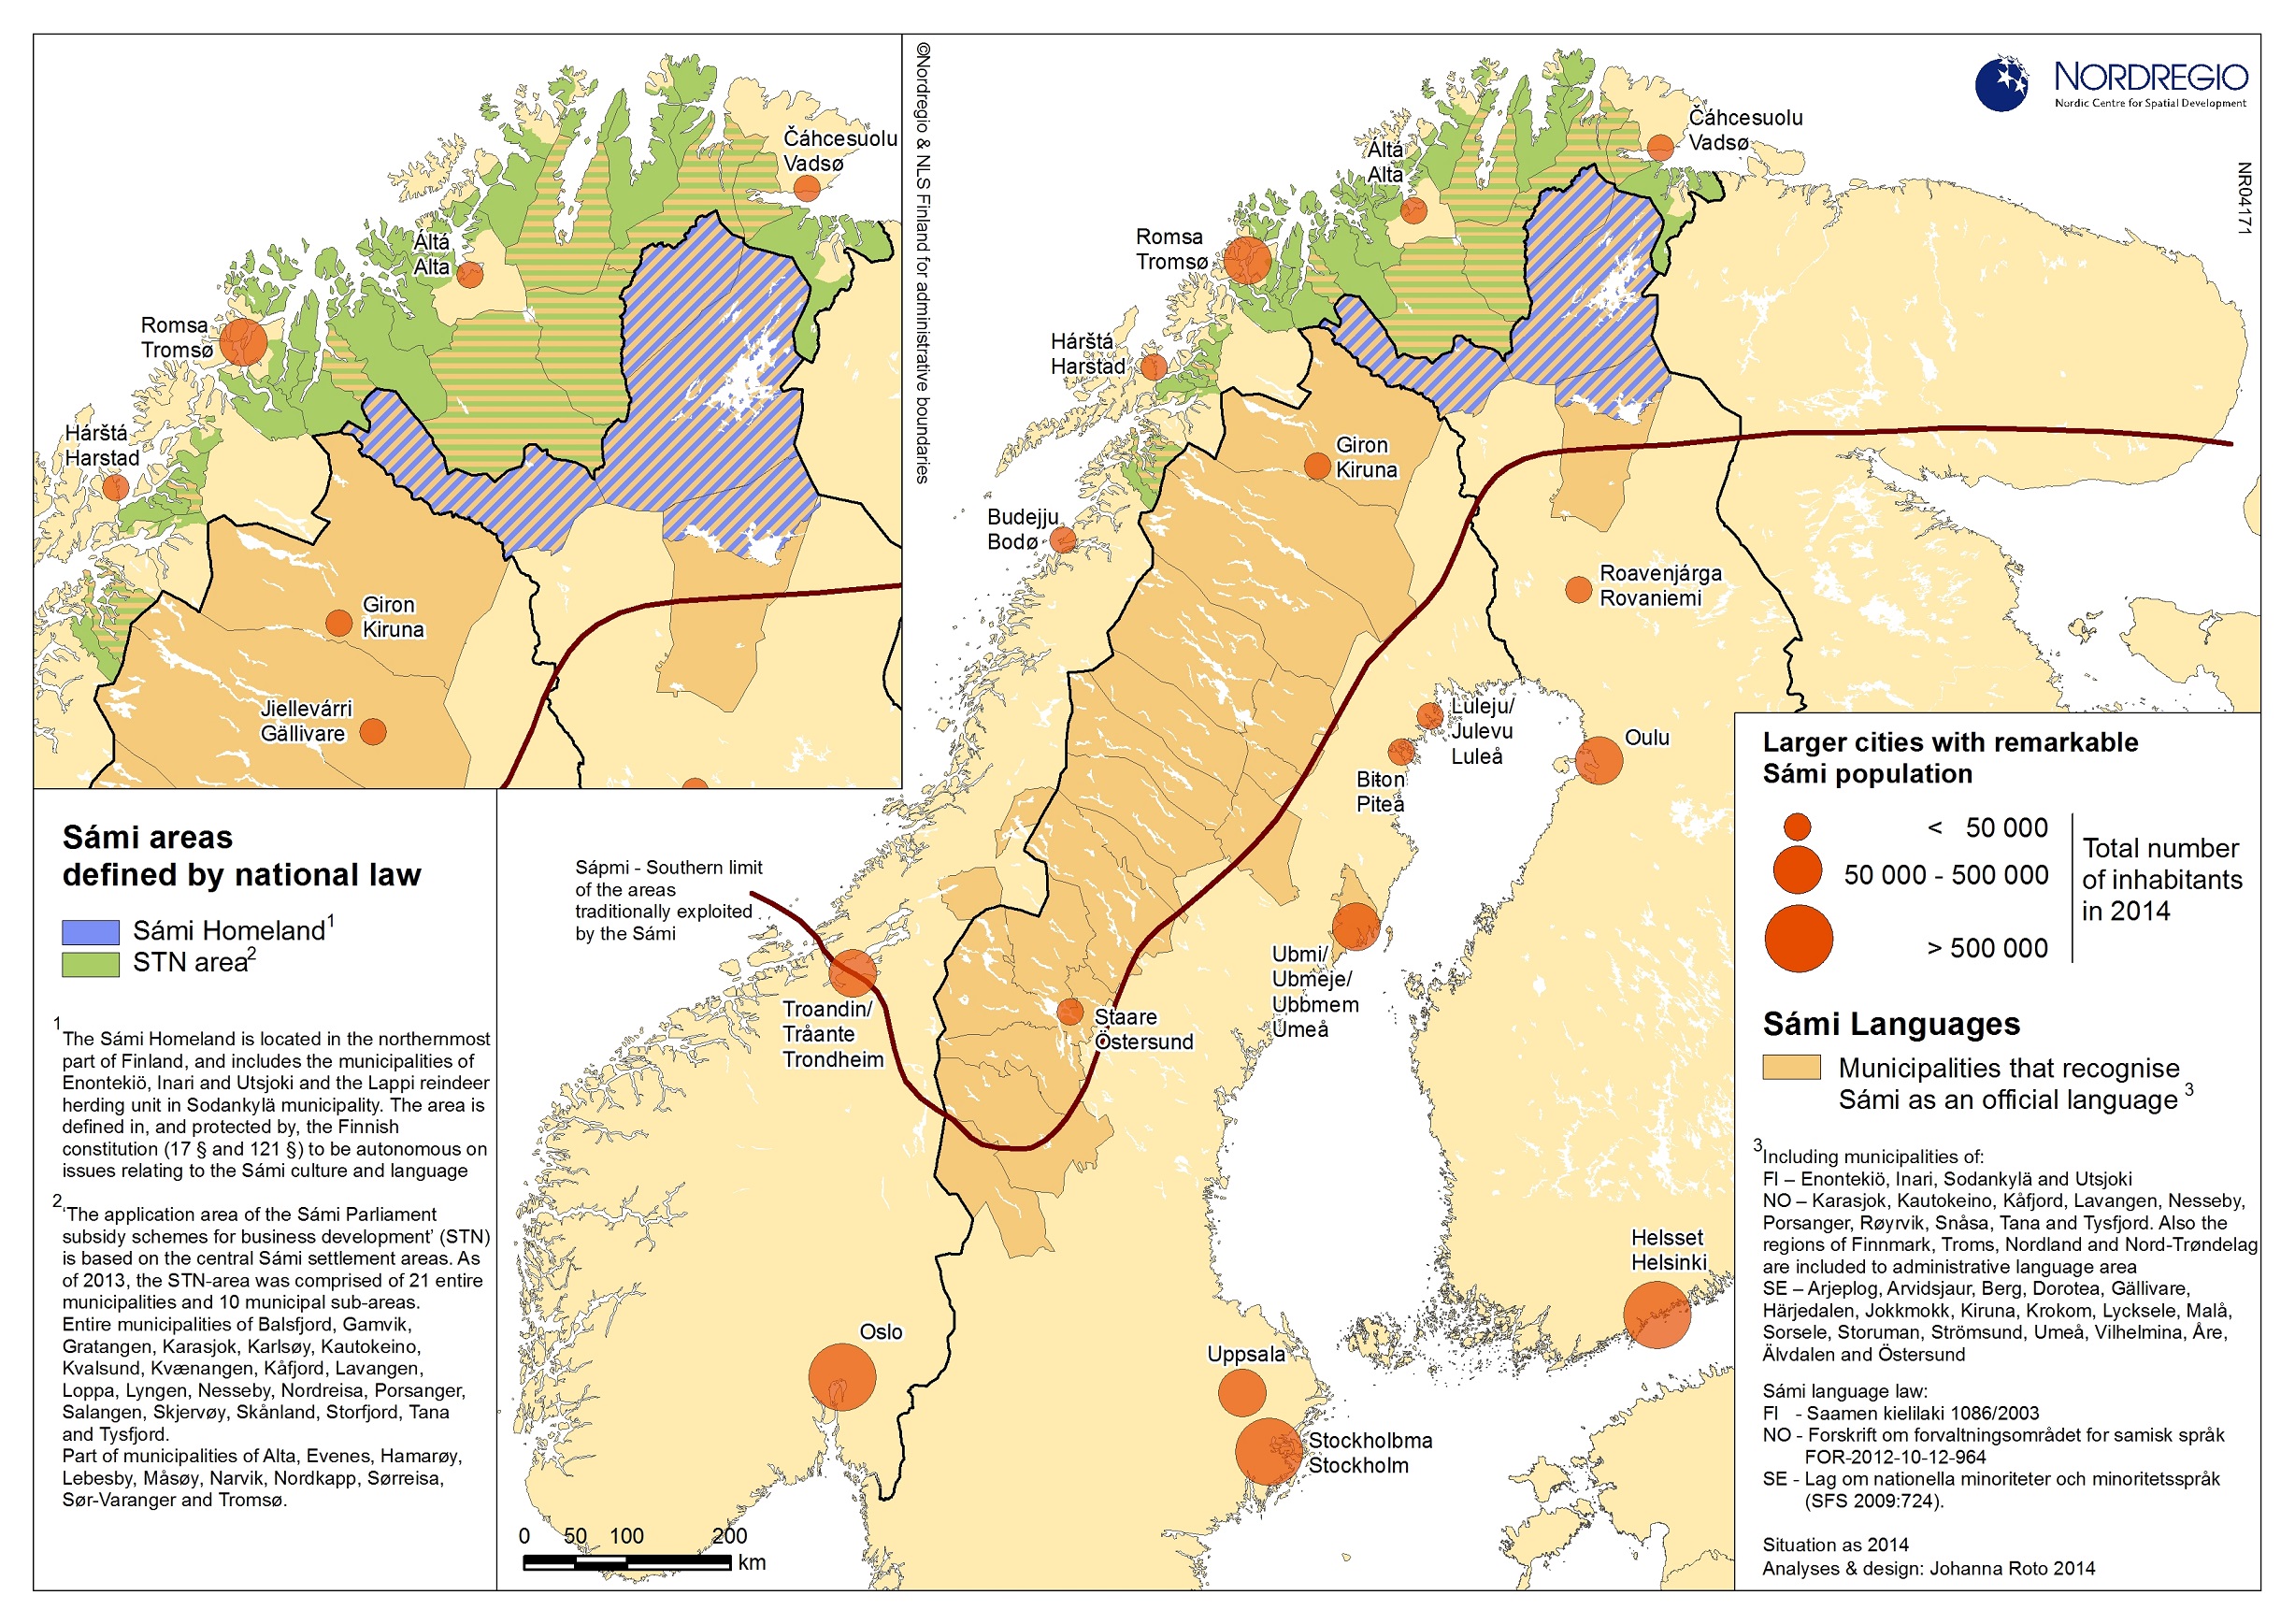 sami people map